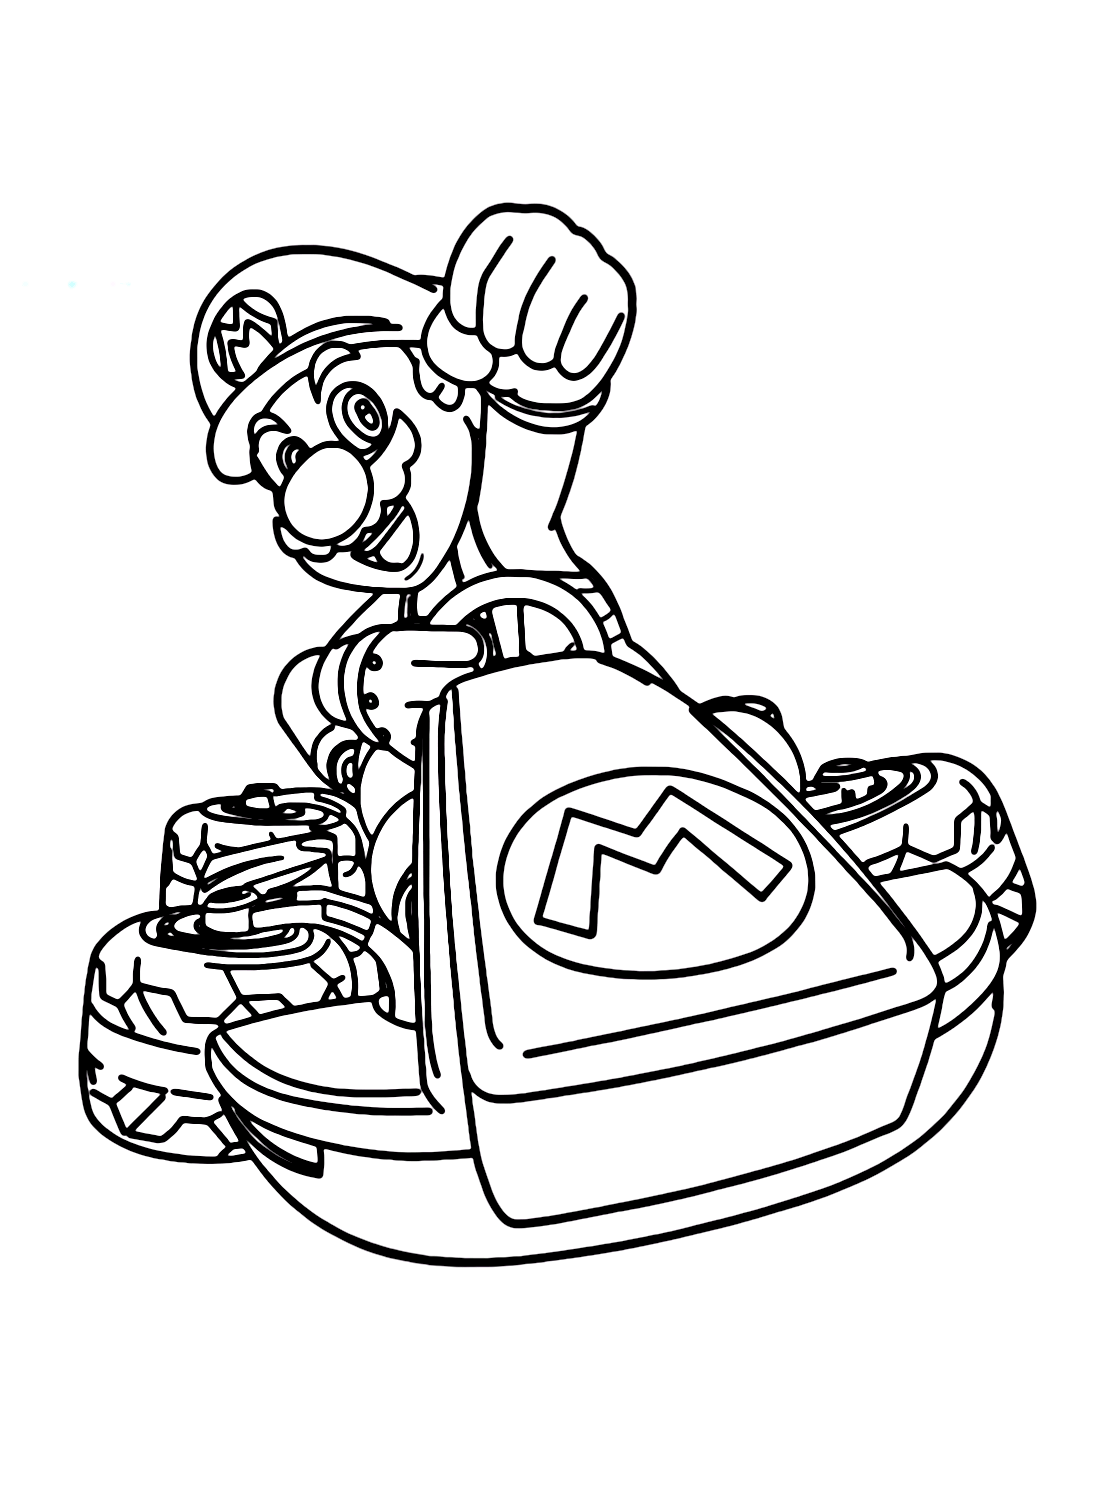 Марио из Mario Kart 8 Deluxe из Mario Kart